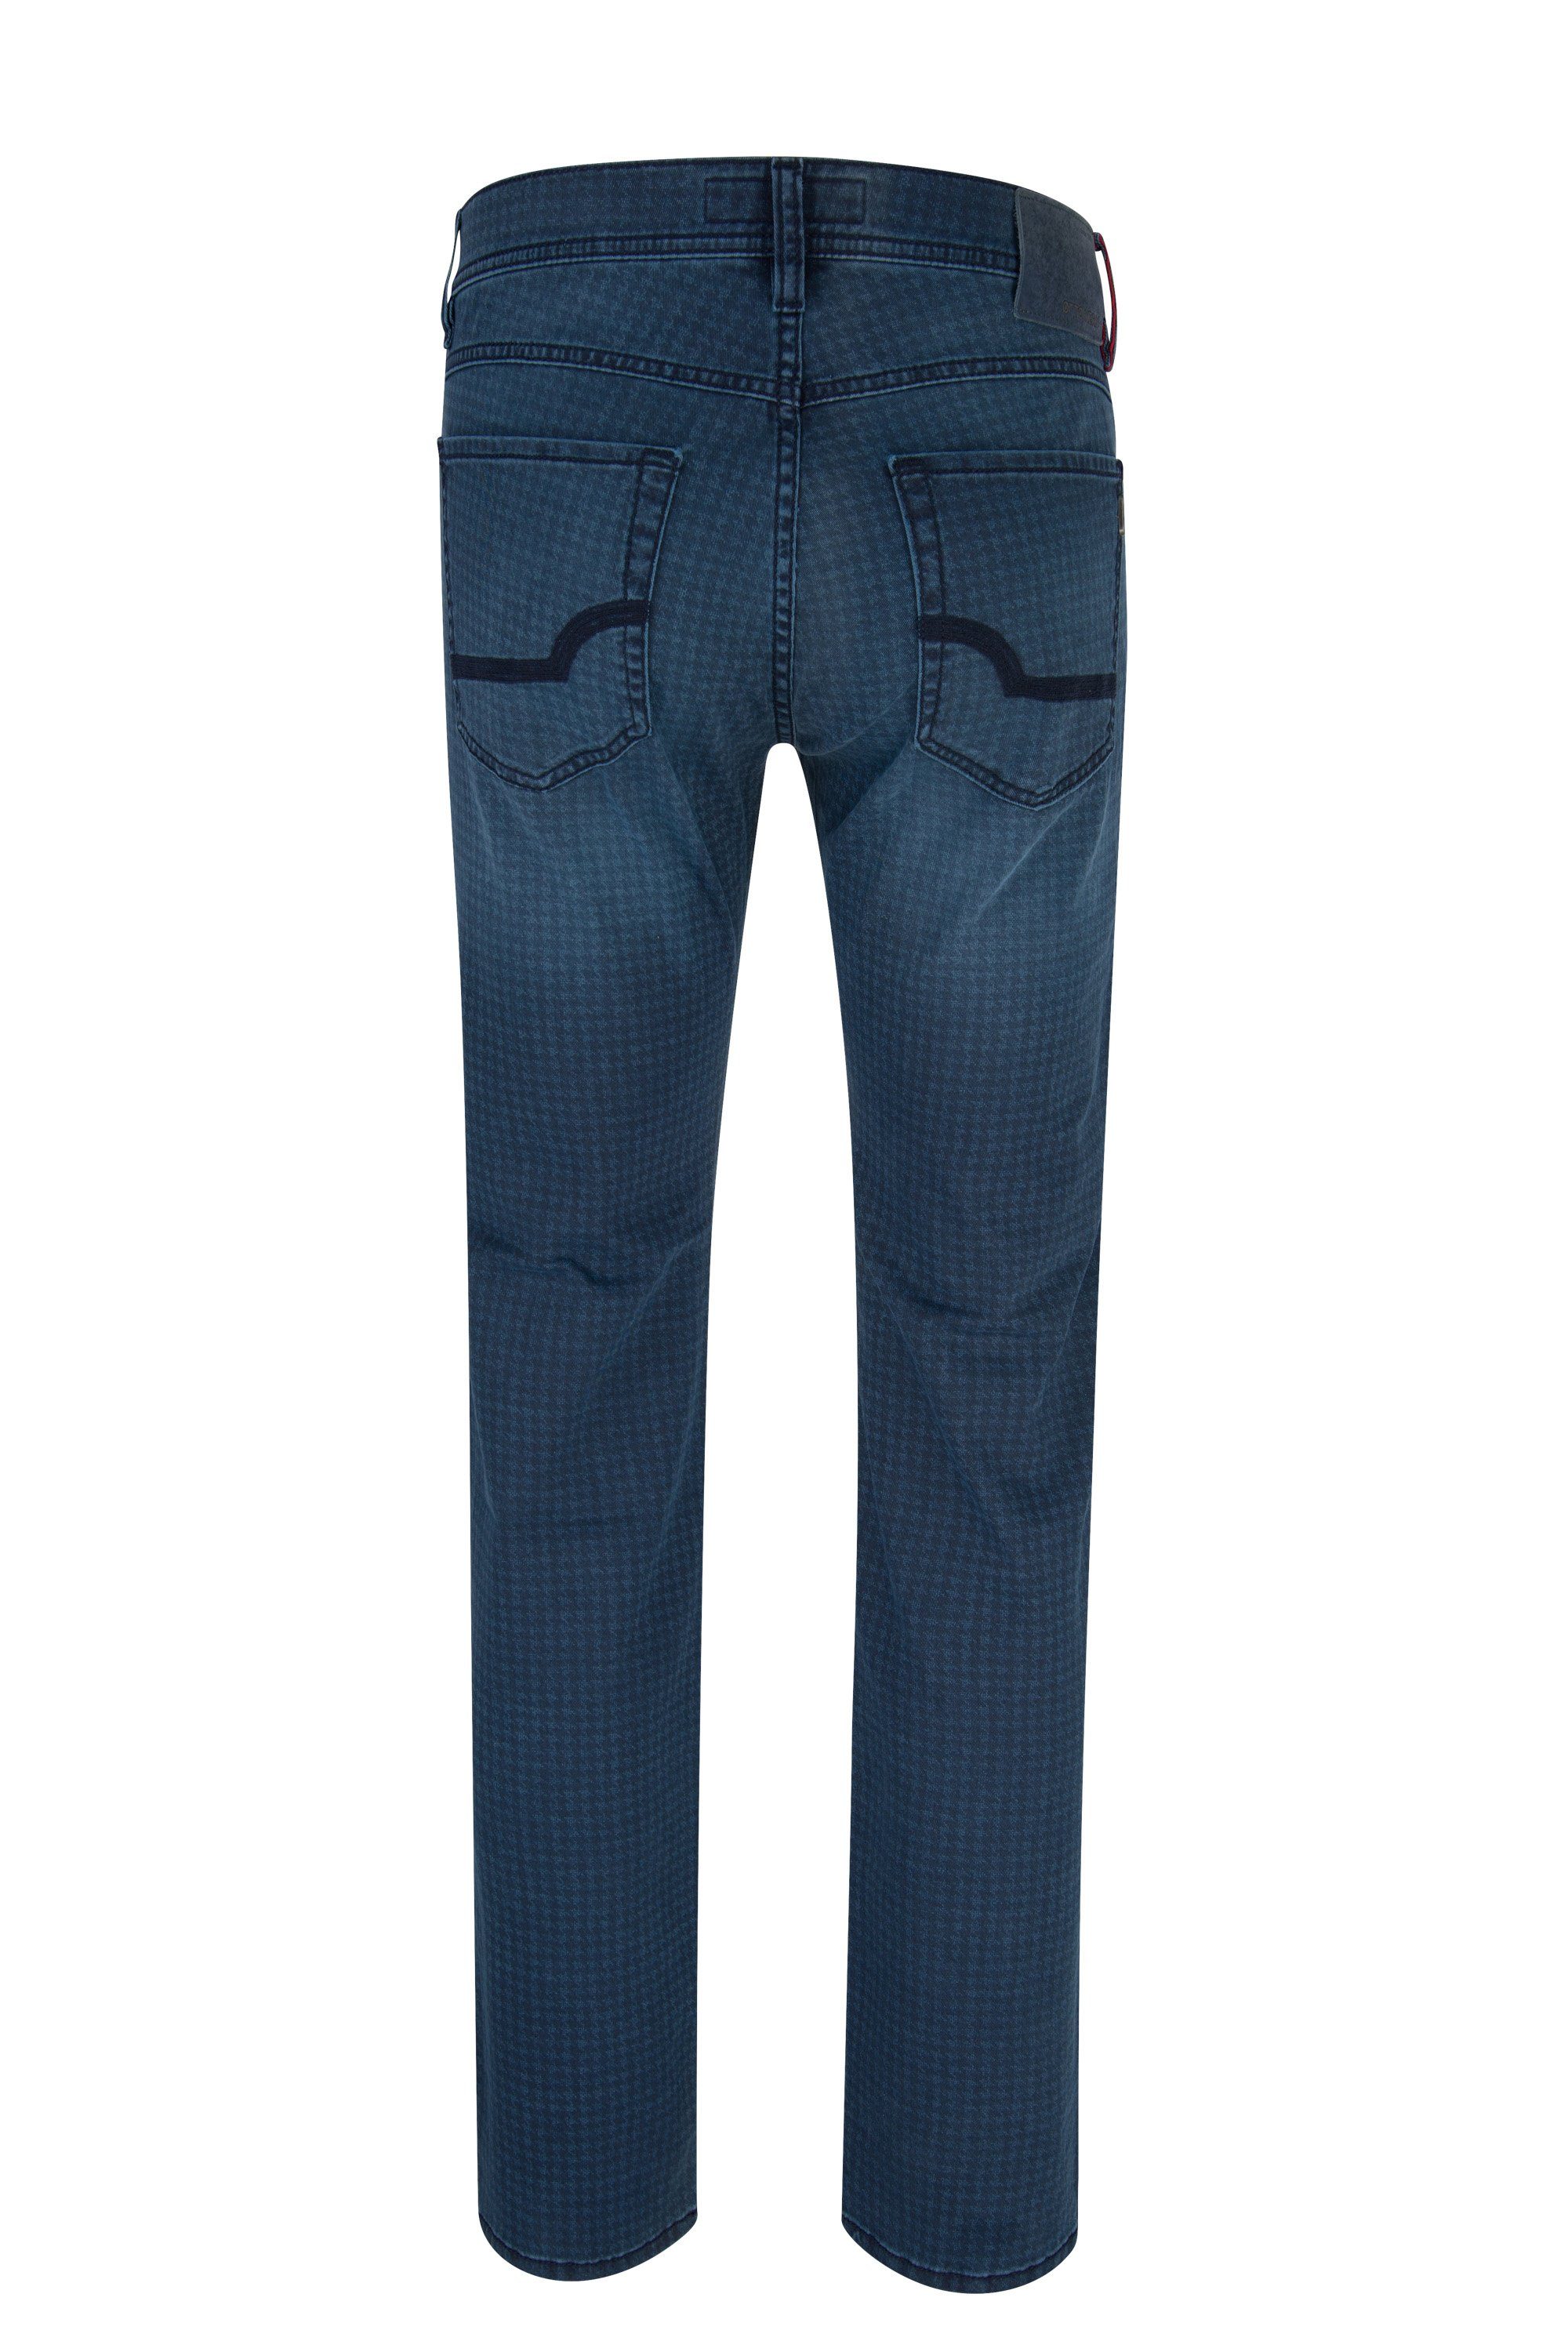 OTTO blue JOHN KERN Kern 5-Pocket-Jeans 6700.6822 patterned used 67042